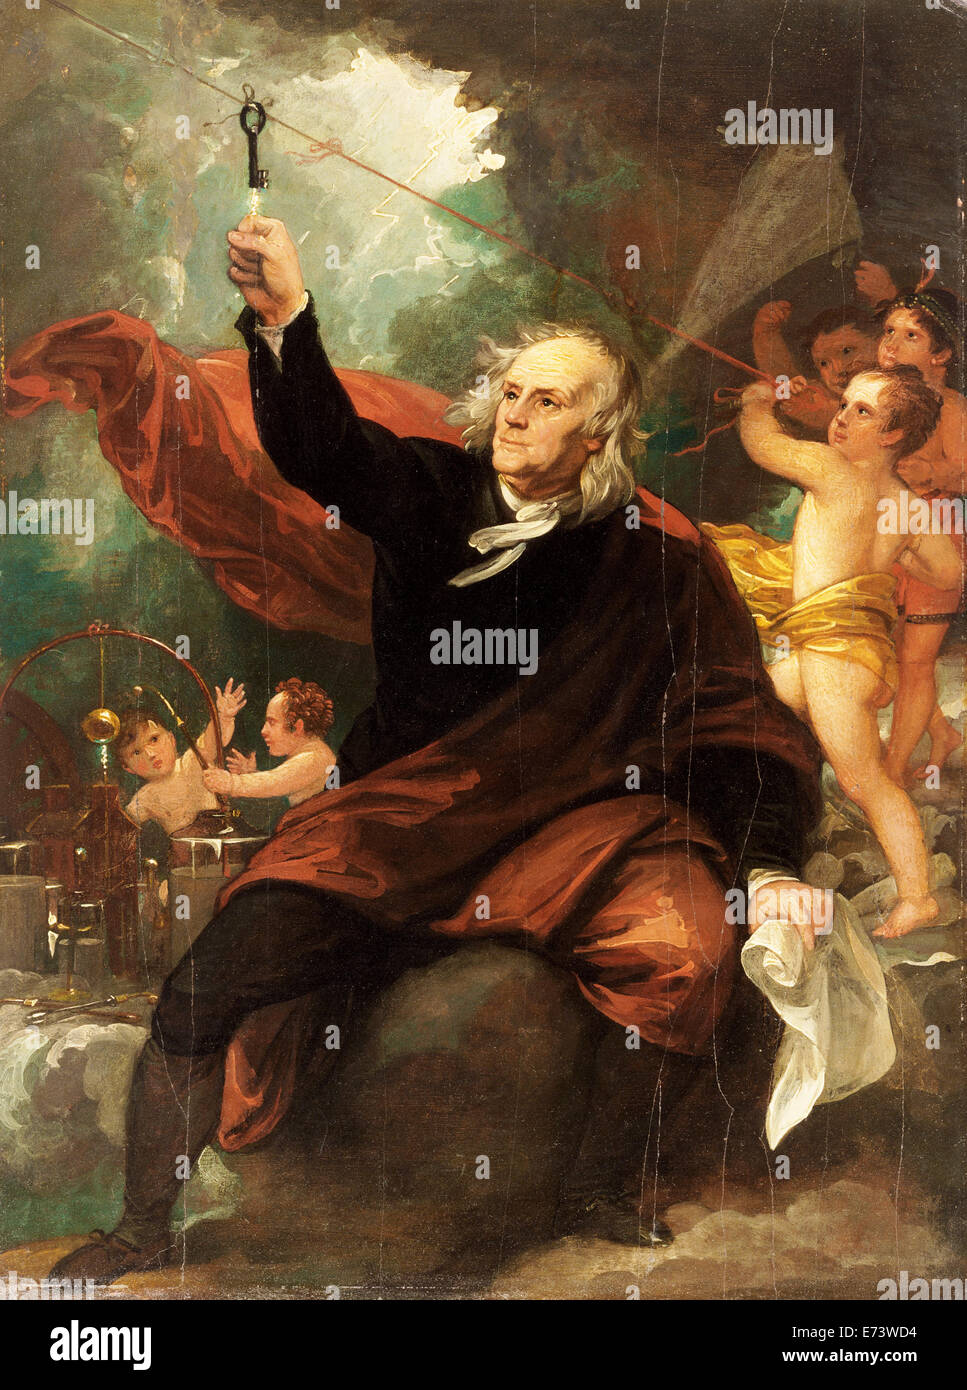 Benjamin Franklin l'électricité Dessin du ciel - par Benjamin West, 1816 Banque D'Images